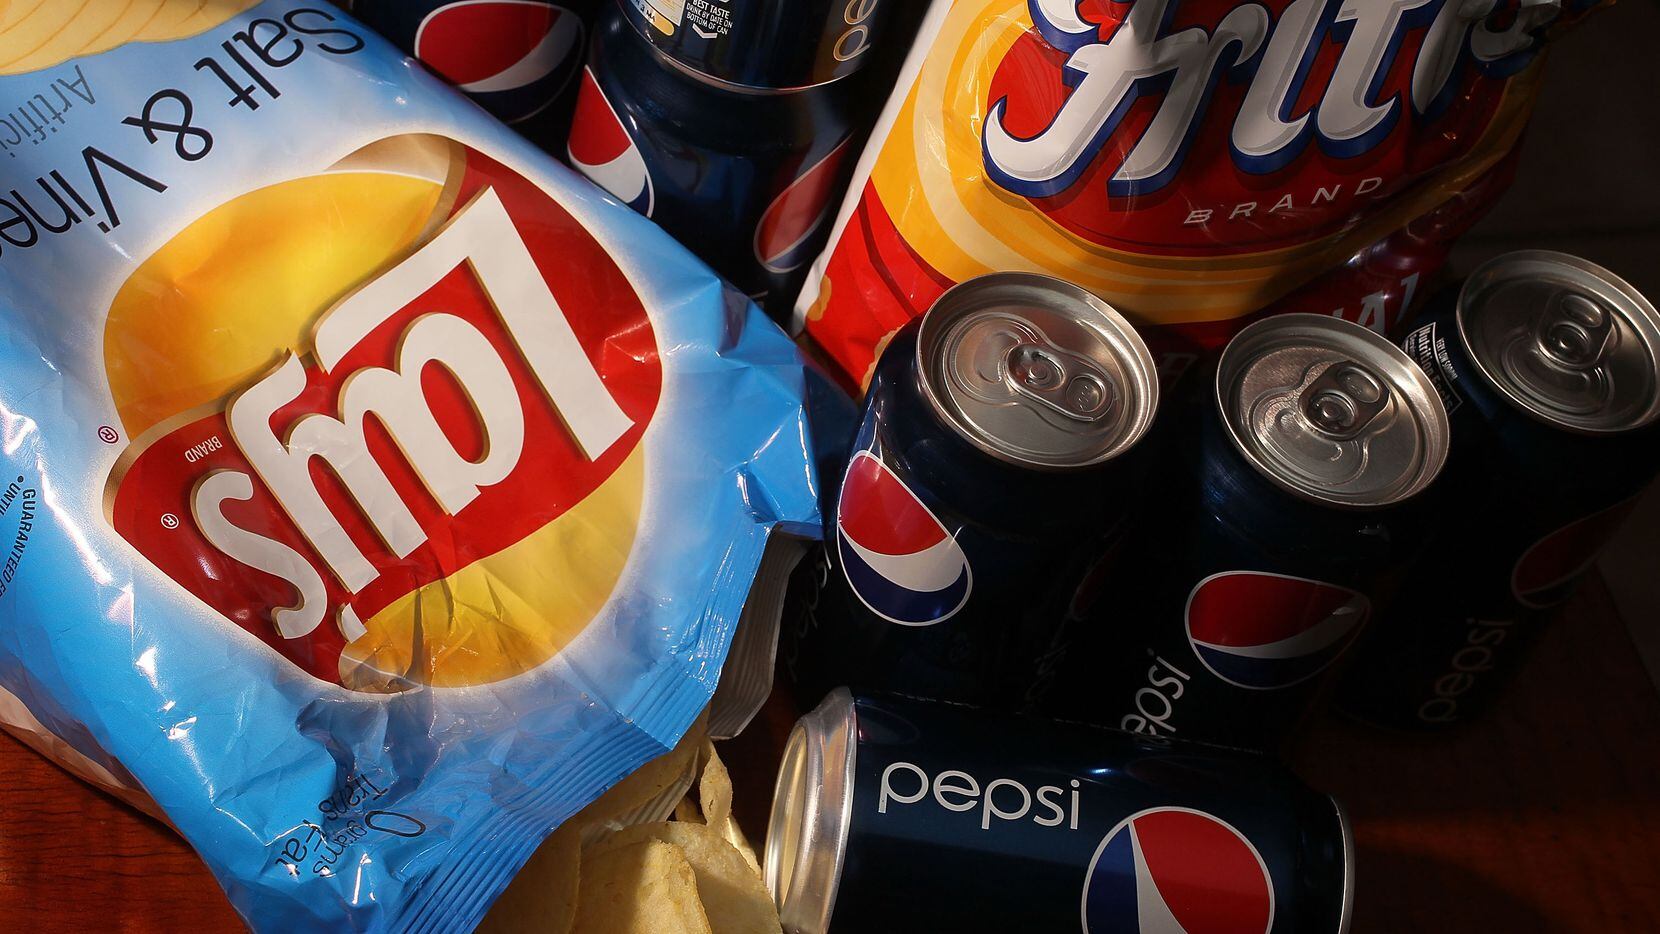 PepsiCo manufactures Doritos, Lays potato chips, Quaker Oats and its namesake soda.